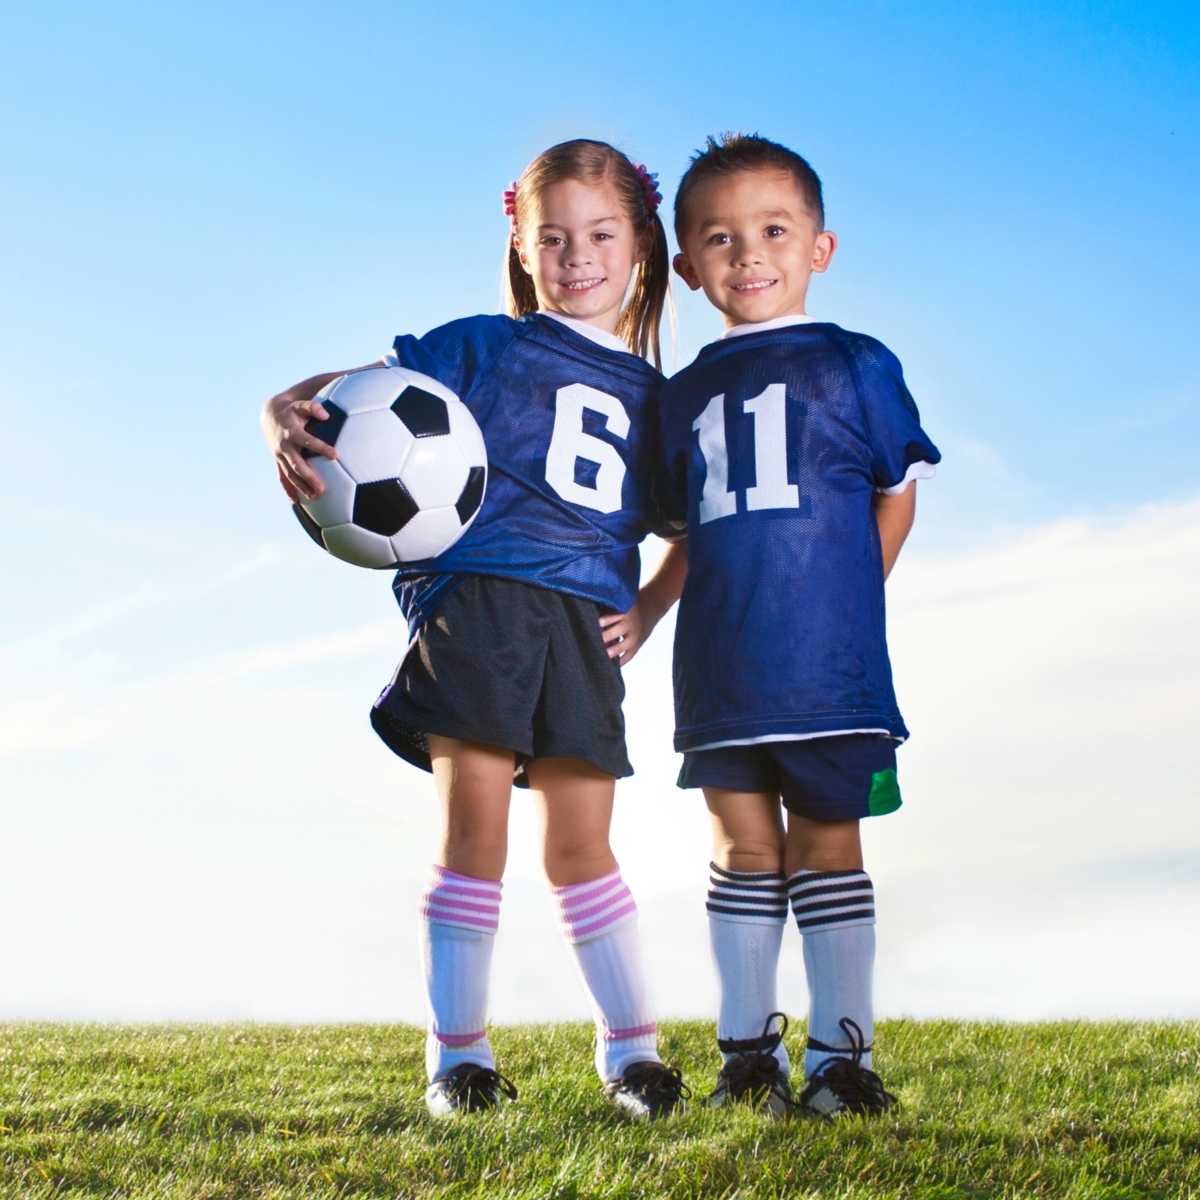 How To Be a Good Soccer Parent Princeton NJ 08543 PunchBugKI